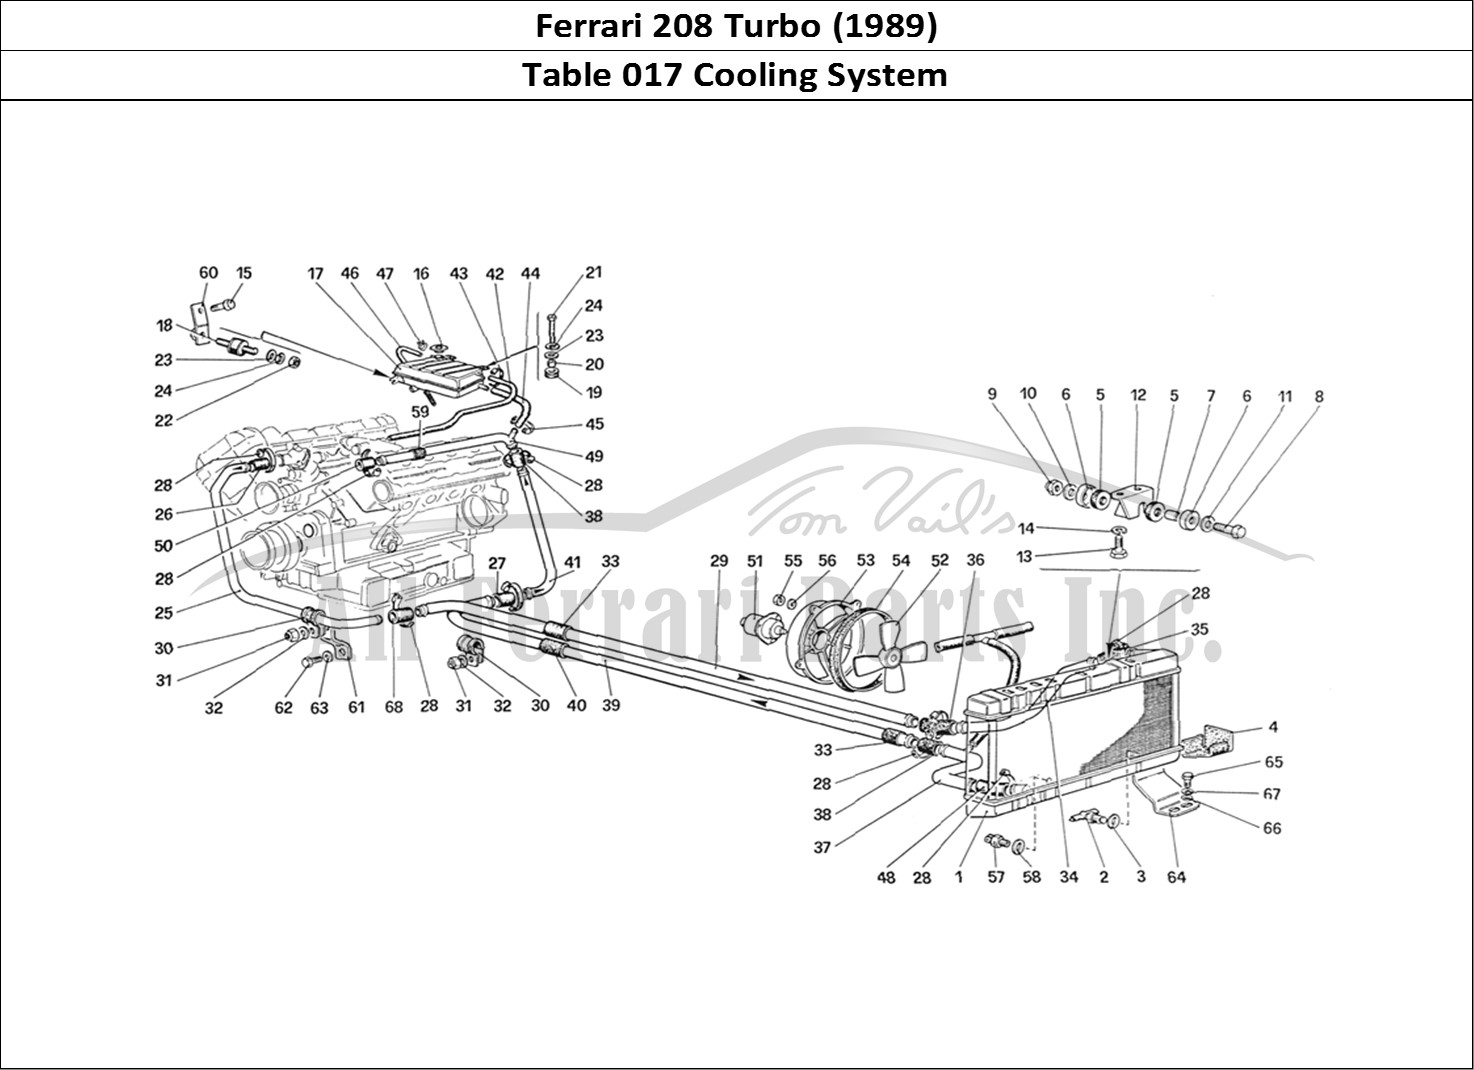 Ferrari Parts Ferrari 208 Turbo (1989) Page 017 Cooling System